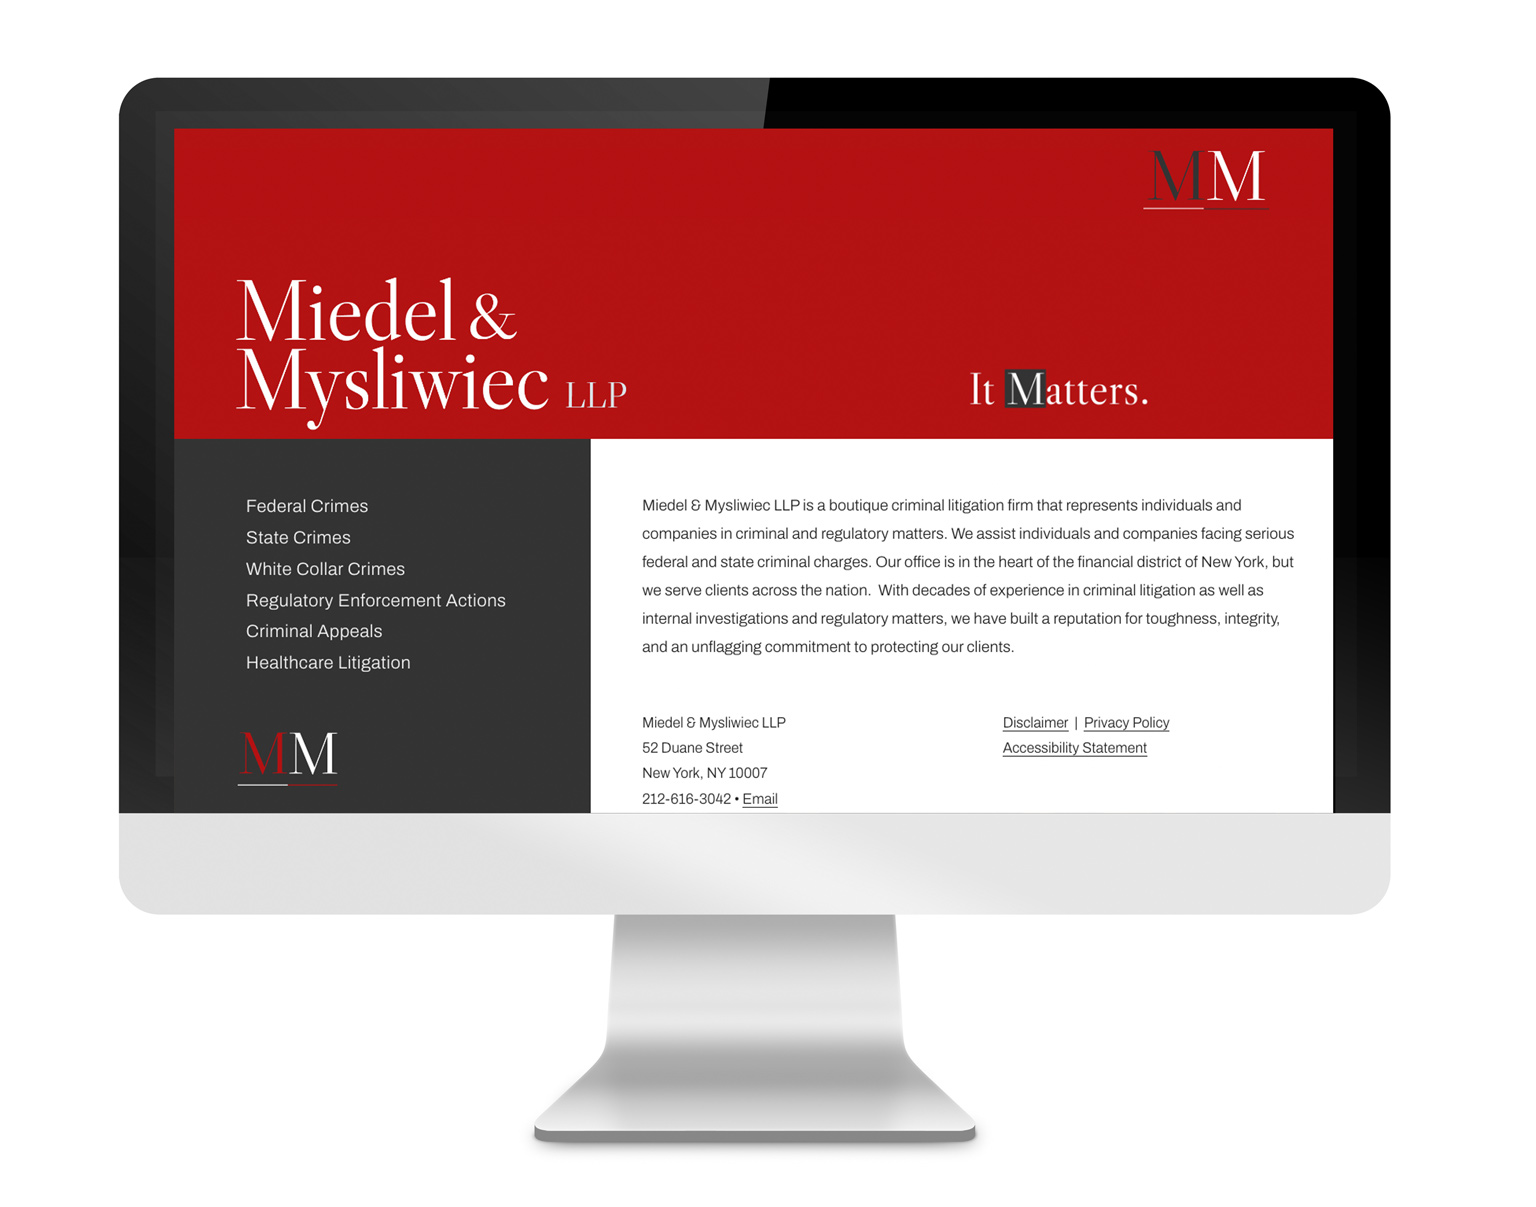 Miedel & Mysliwiec website, designed by DLS Design